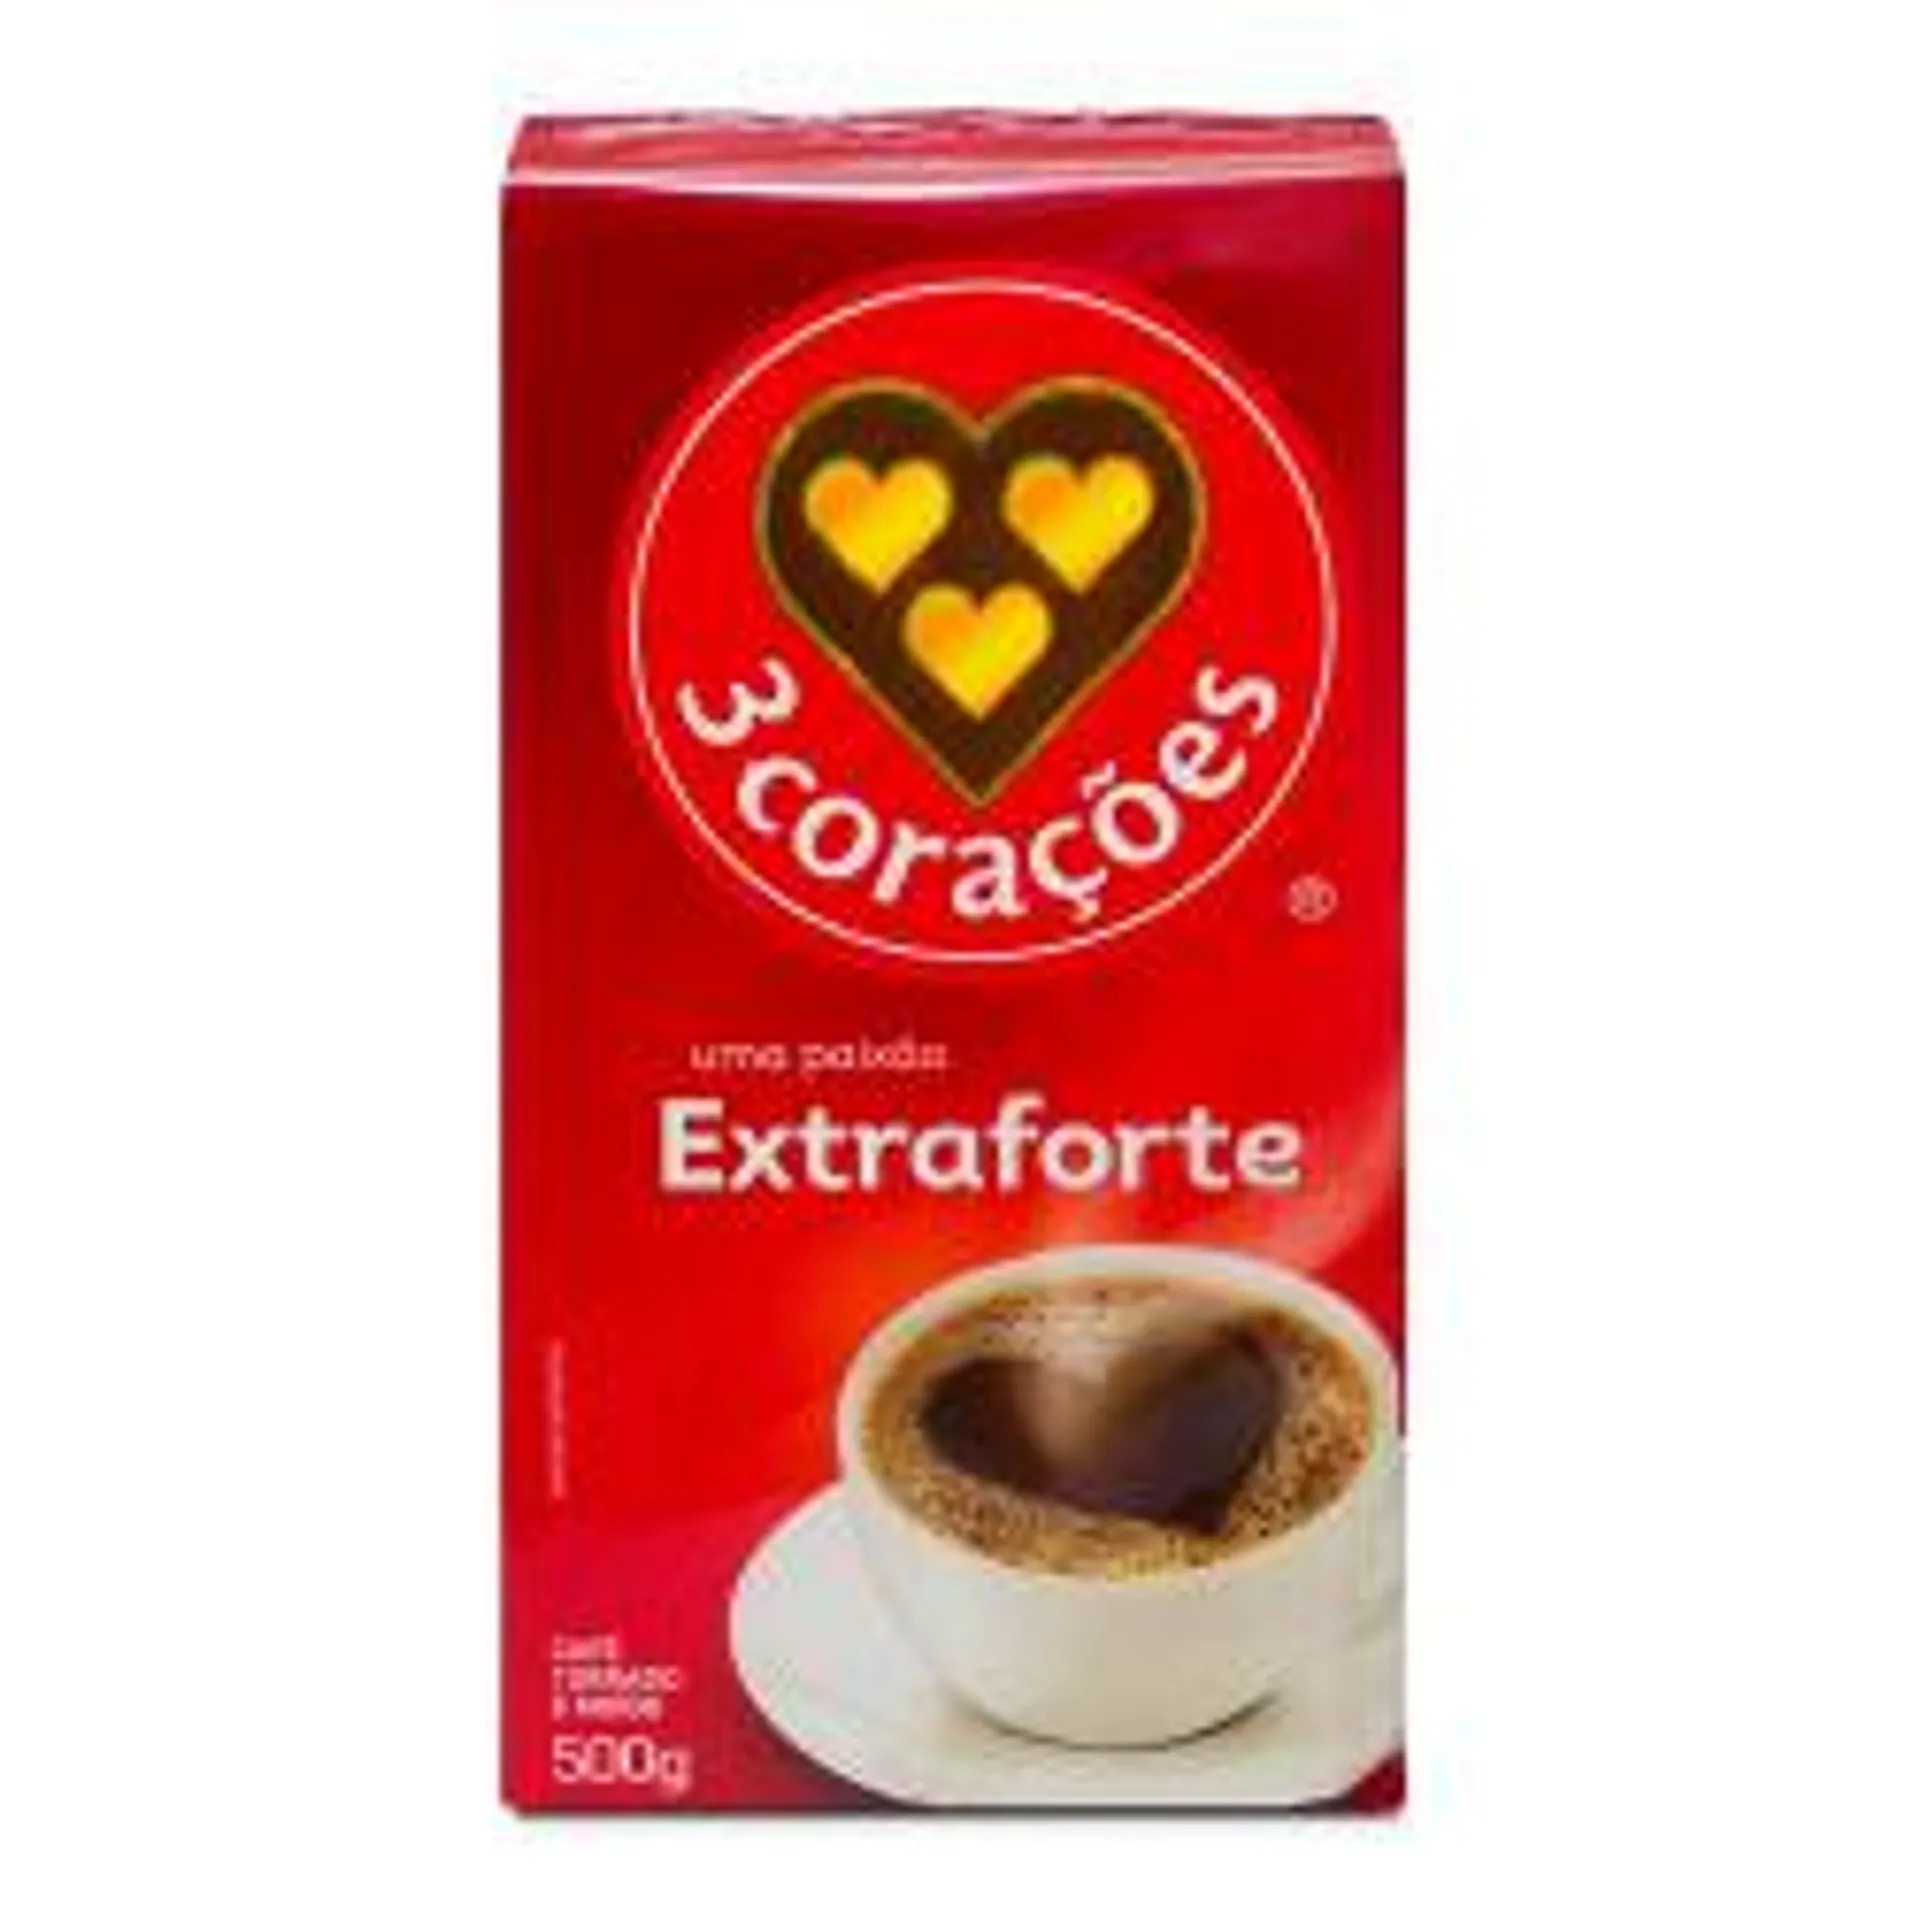 Café Extraforte a Vacuo 3 Coracoes 500g